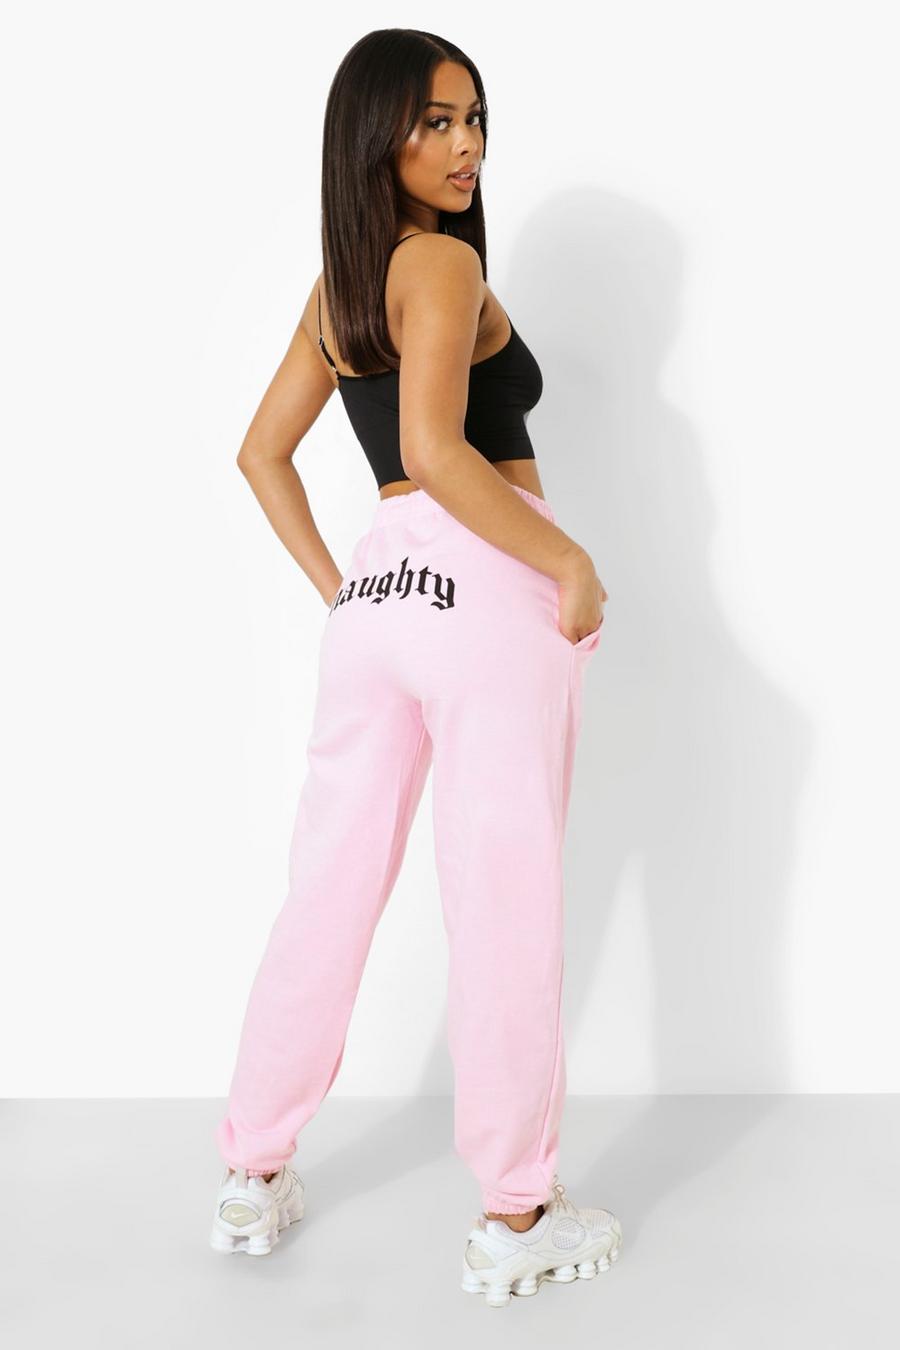 Pantaloni tuta con scritta Naughty sui glutei, Rosa pallido image number 1